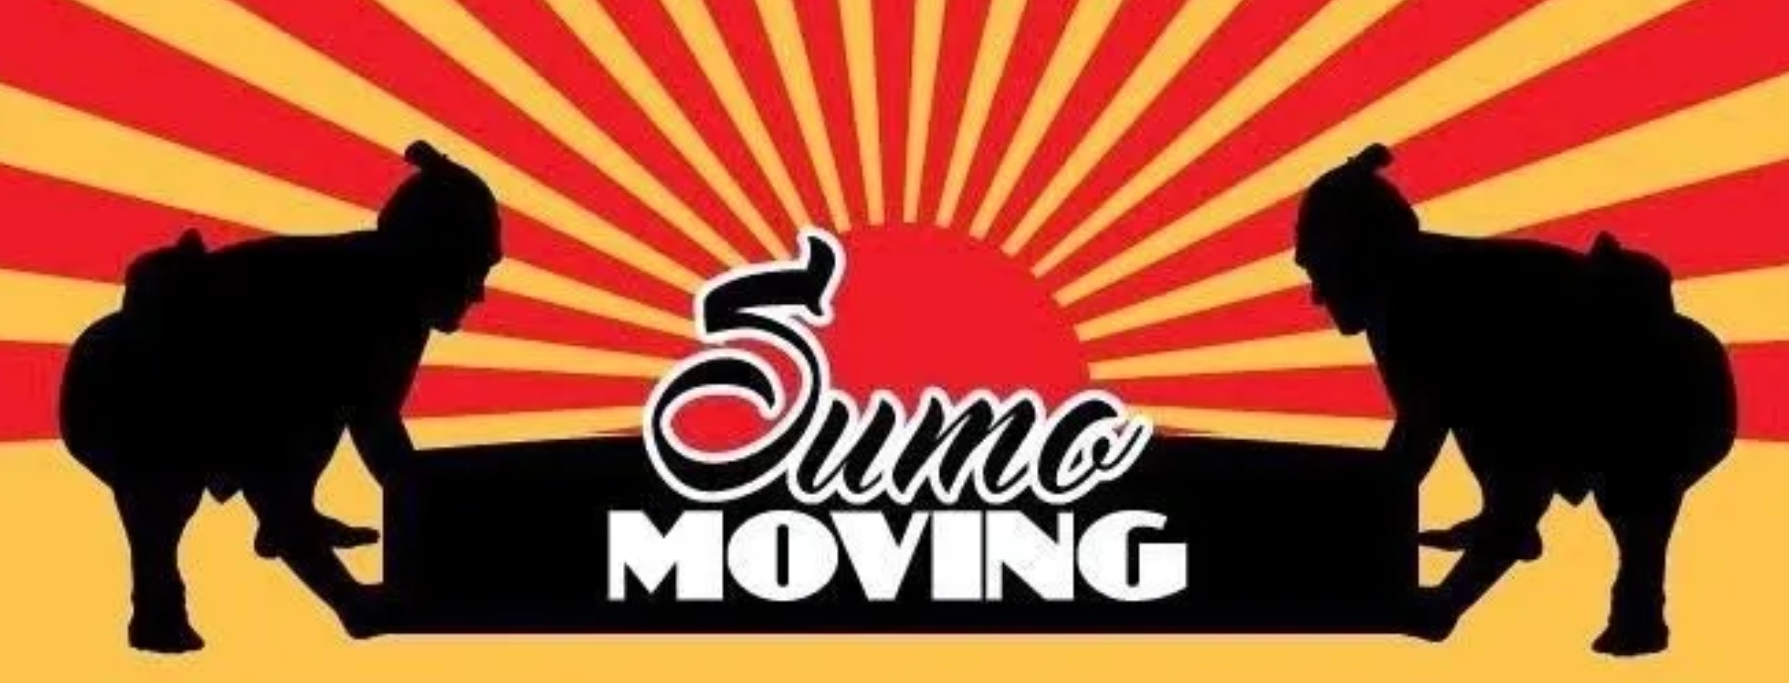 Sumo Moving company logo